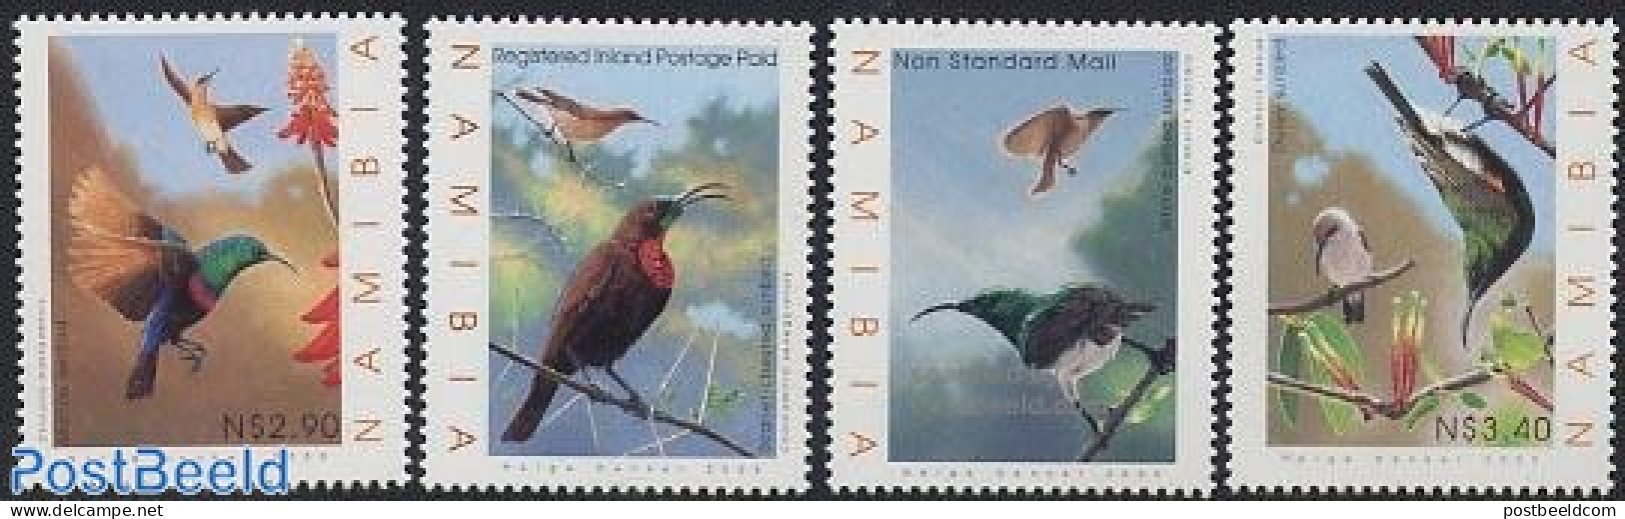 Namibia 2005 Birds 4v, Mint NH, Nature - Birds - Namibië (1990- ...)